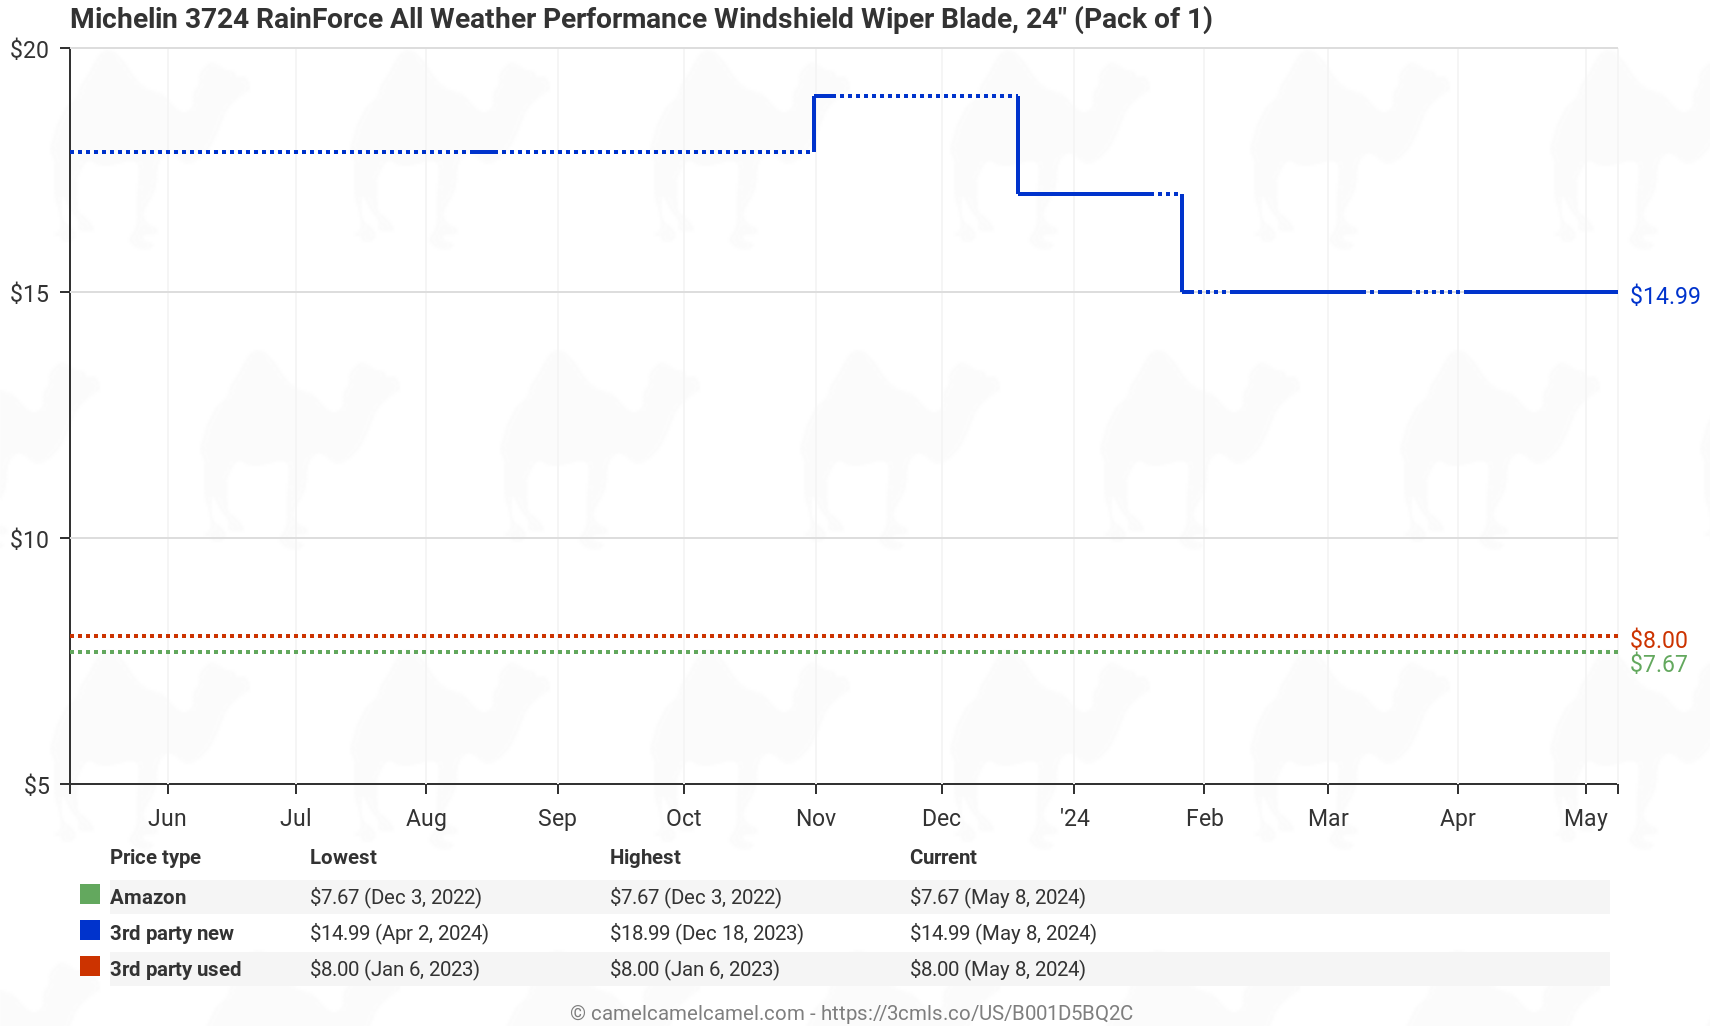 Michelin 3724 RainForce All Weather Performance Windshield Wiper Blade, 24" (Pack of 1) - Price History: B001D5BQ2C